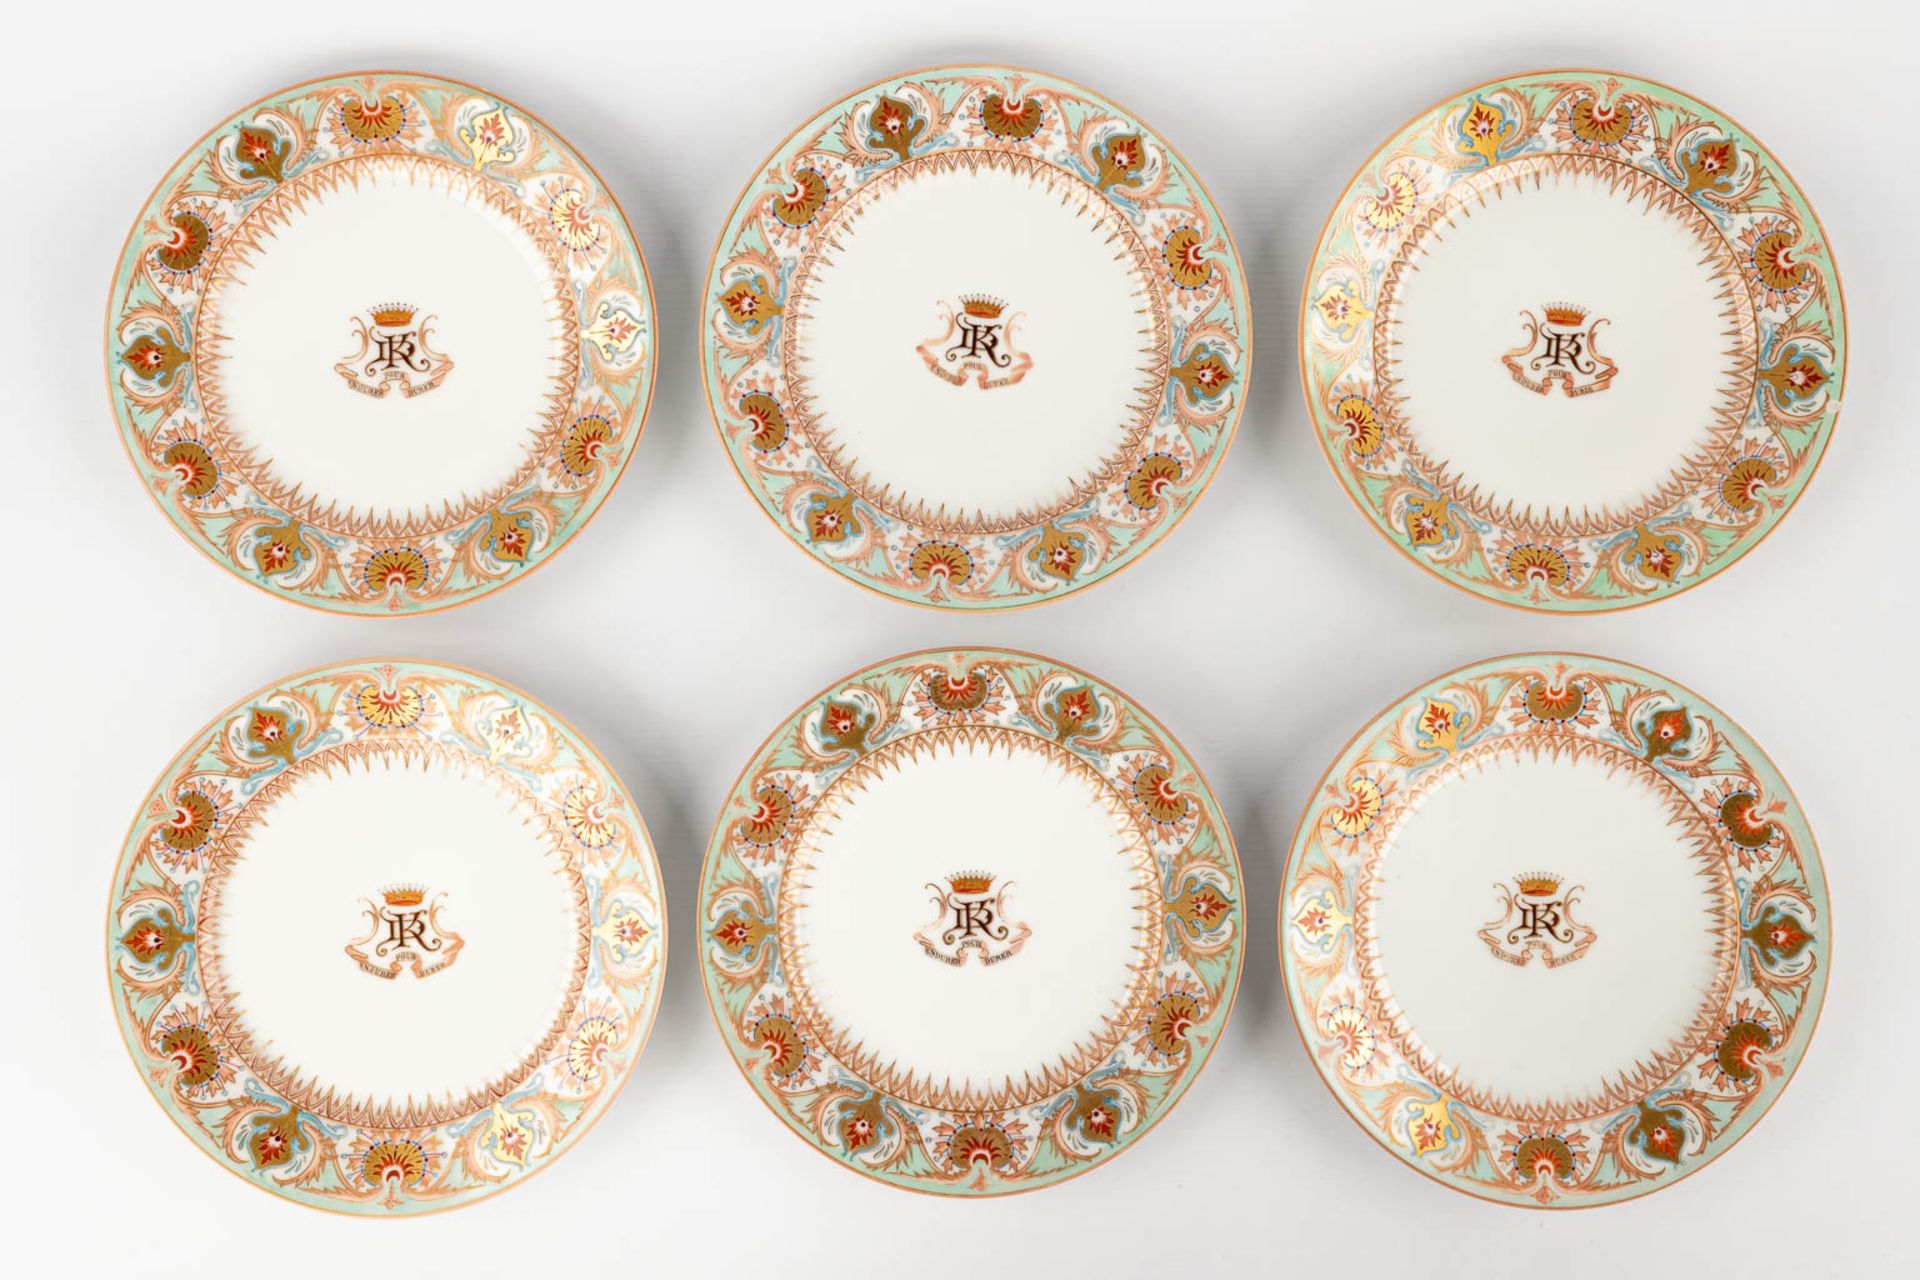 A set of 2 tazza and 6 plates, Count 'De Kerckhove', Brussel. 19th C. (H:13,5 x D:22,5 cm) - Image 10 of 15